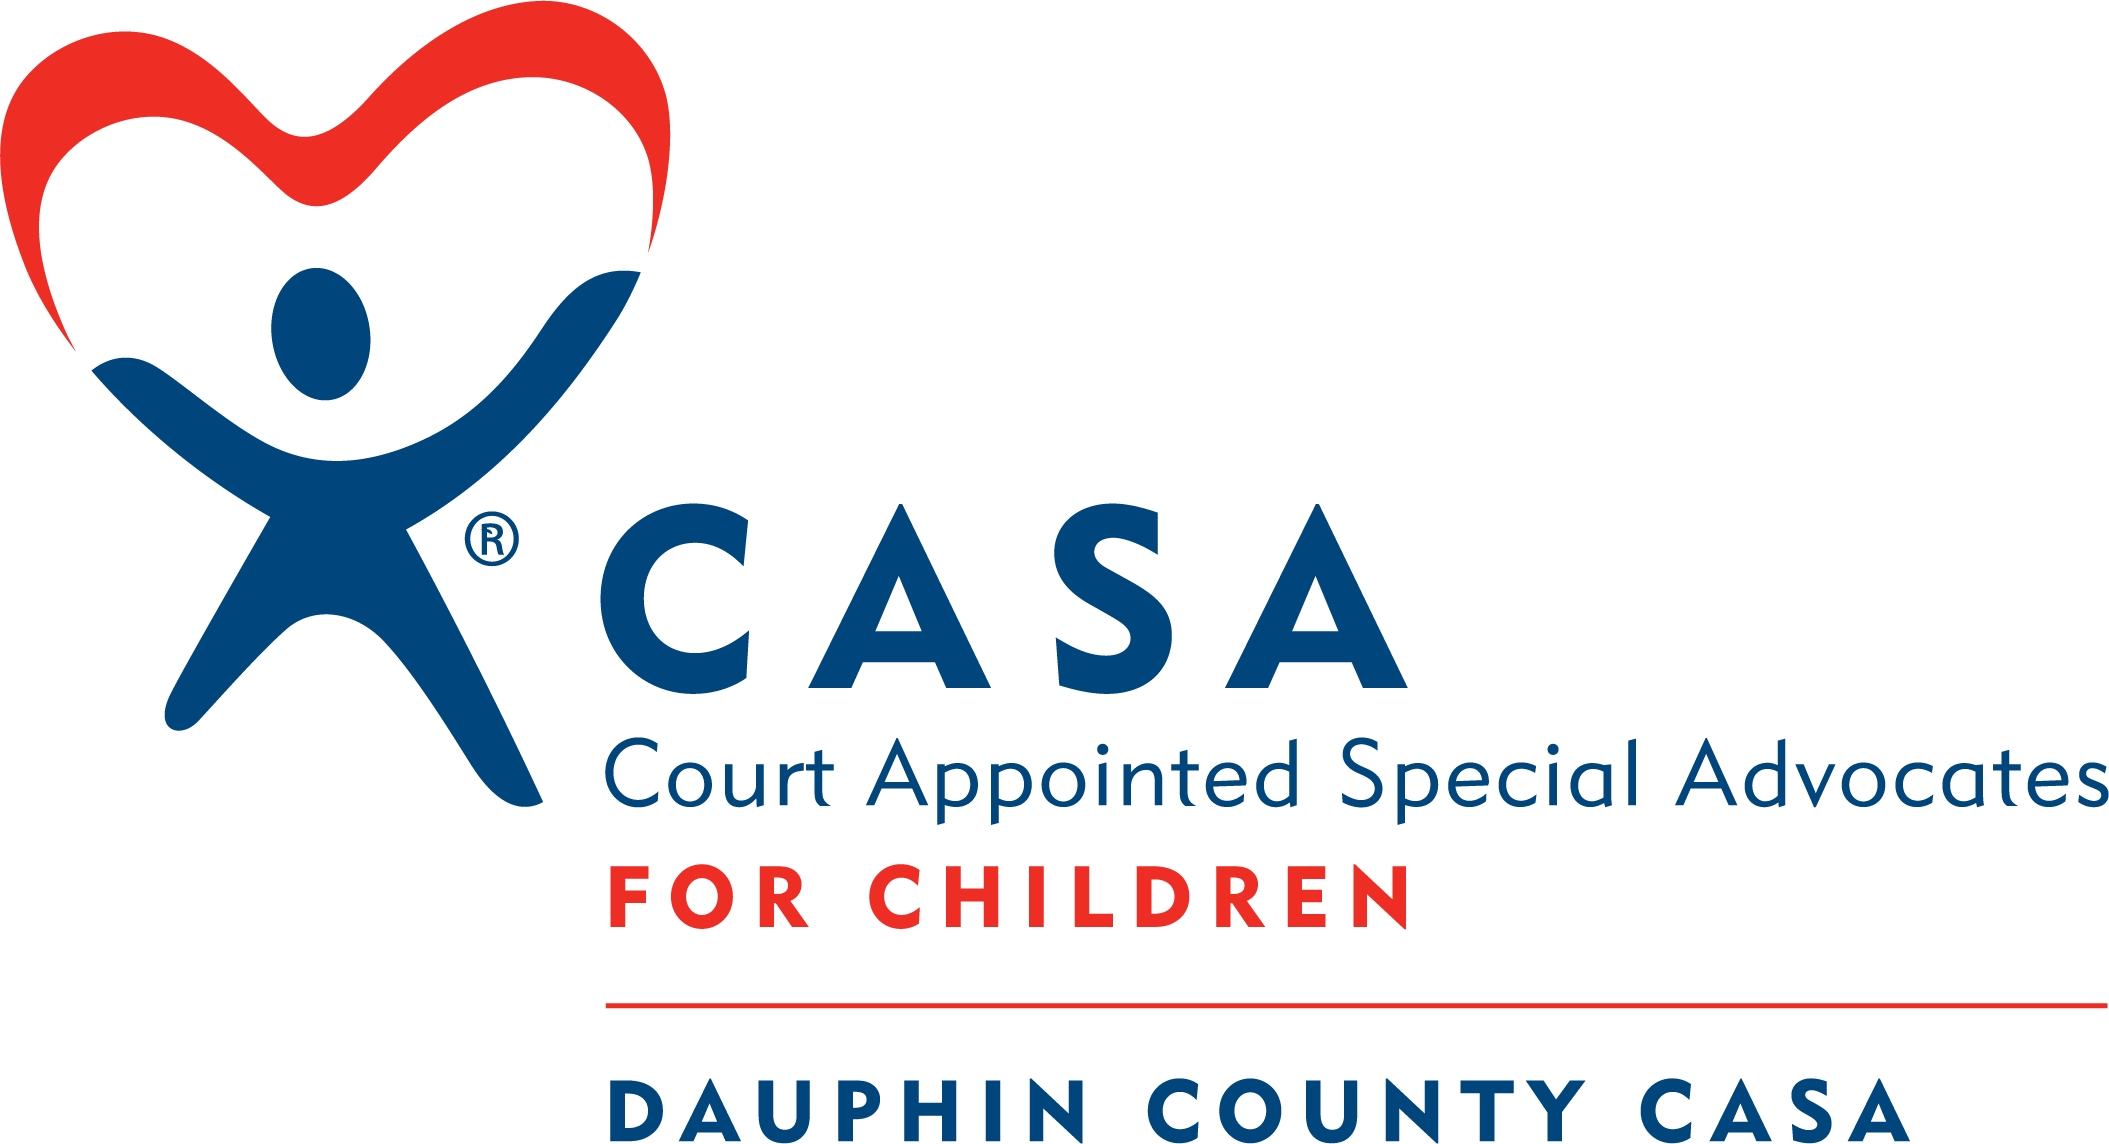 Dauphin County CASA